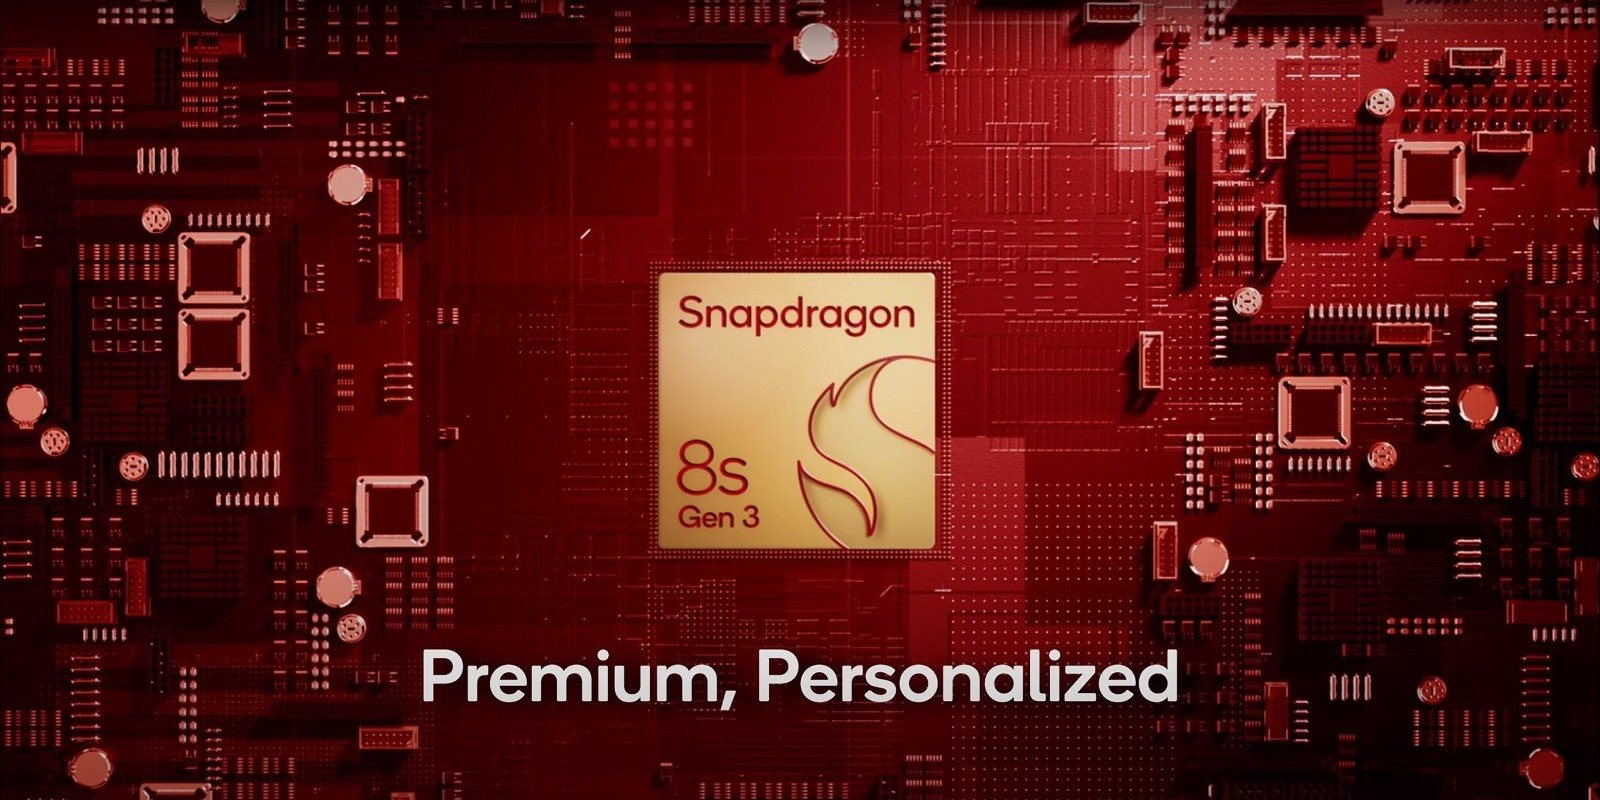 Qualcomm Snapdragon 8s Gen 3, bemutató